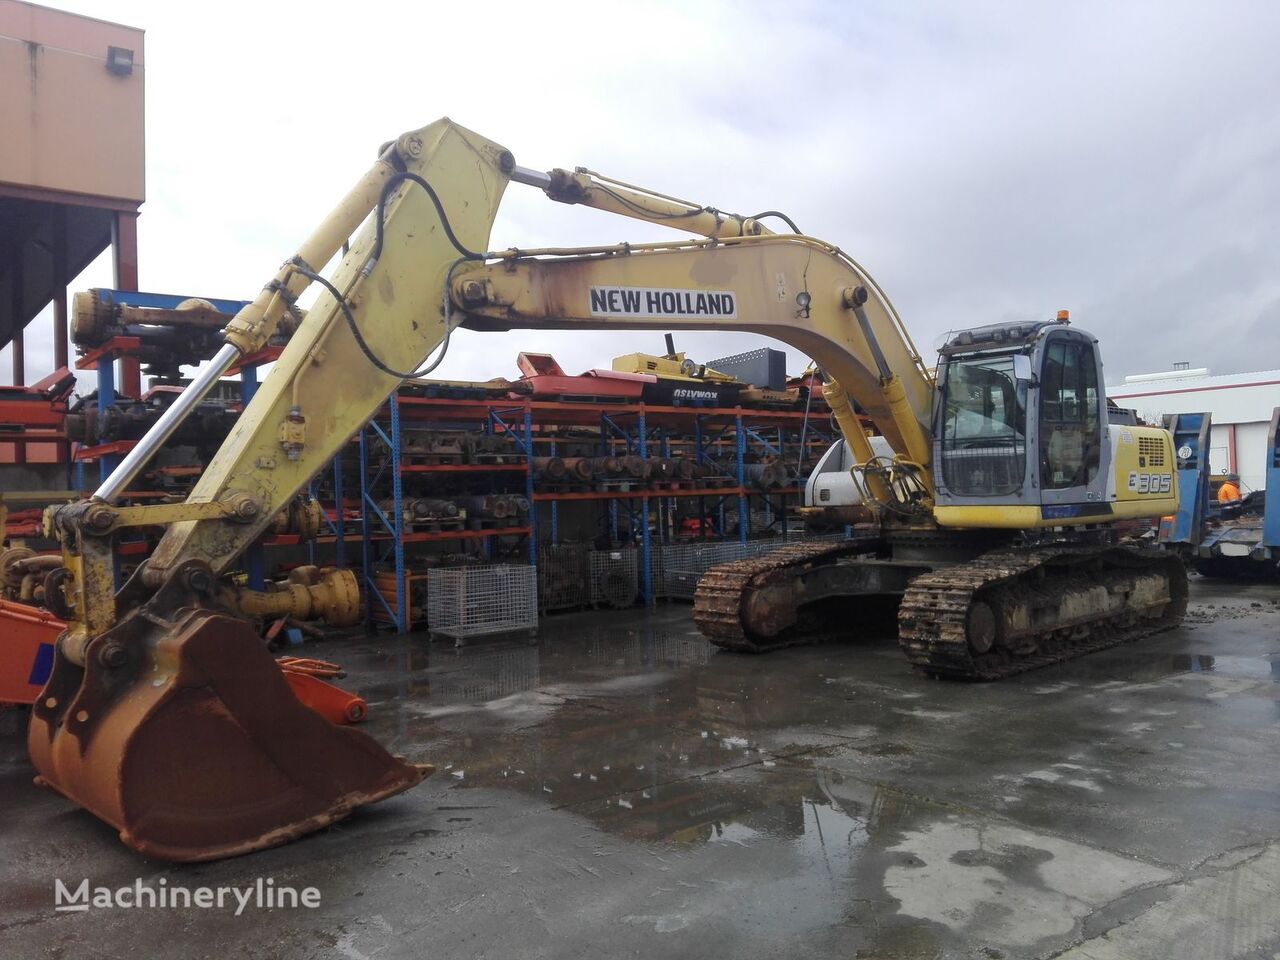 New Holland E305 tracked excavator